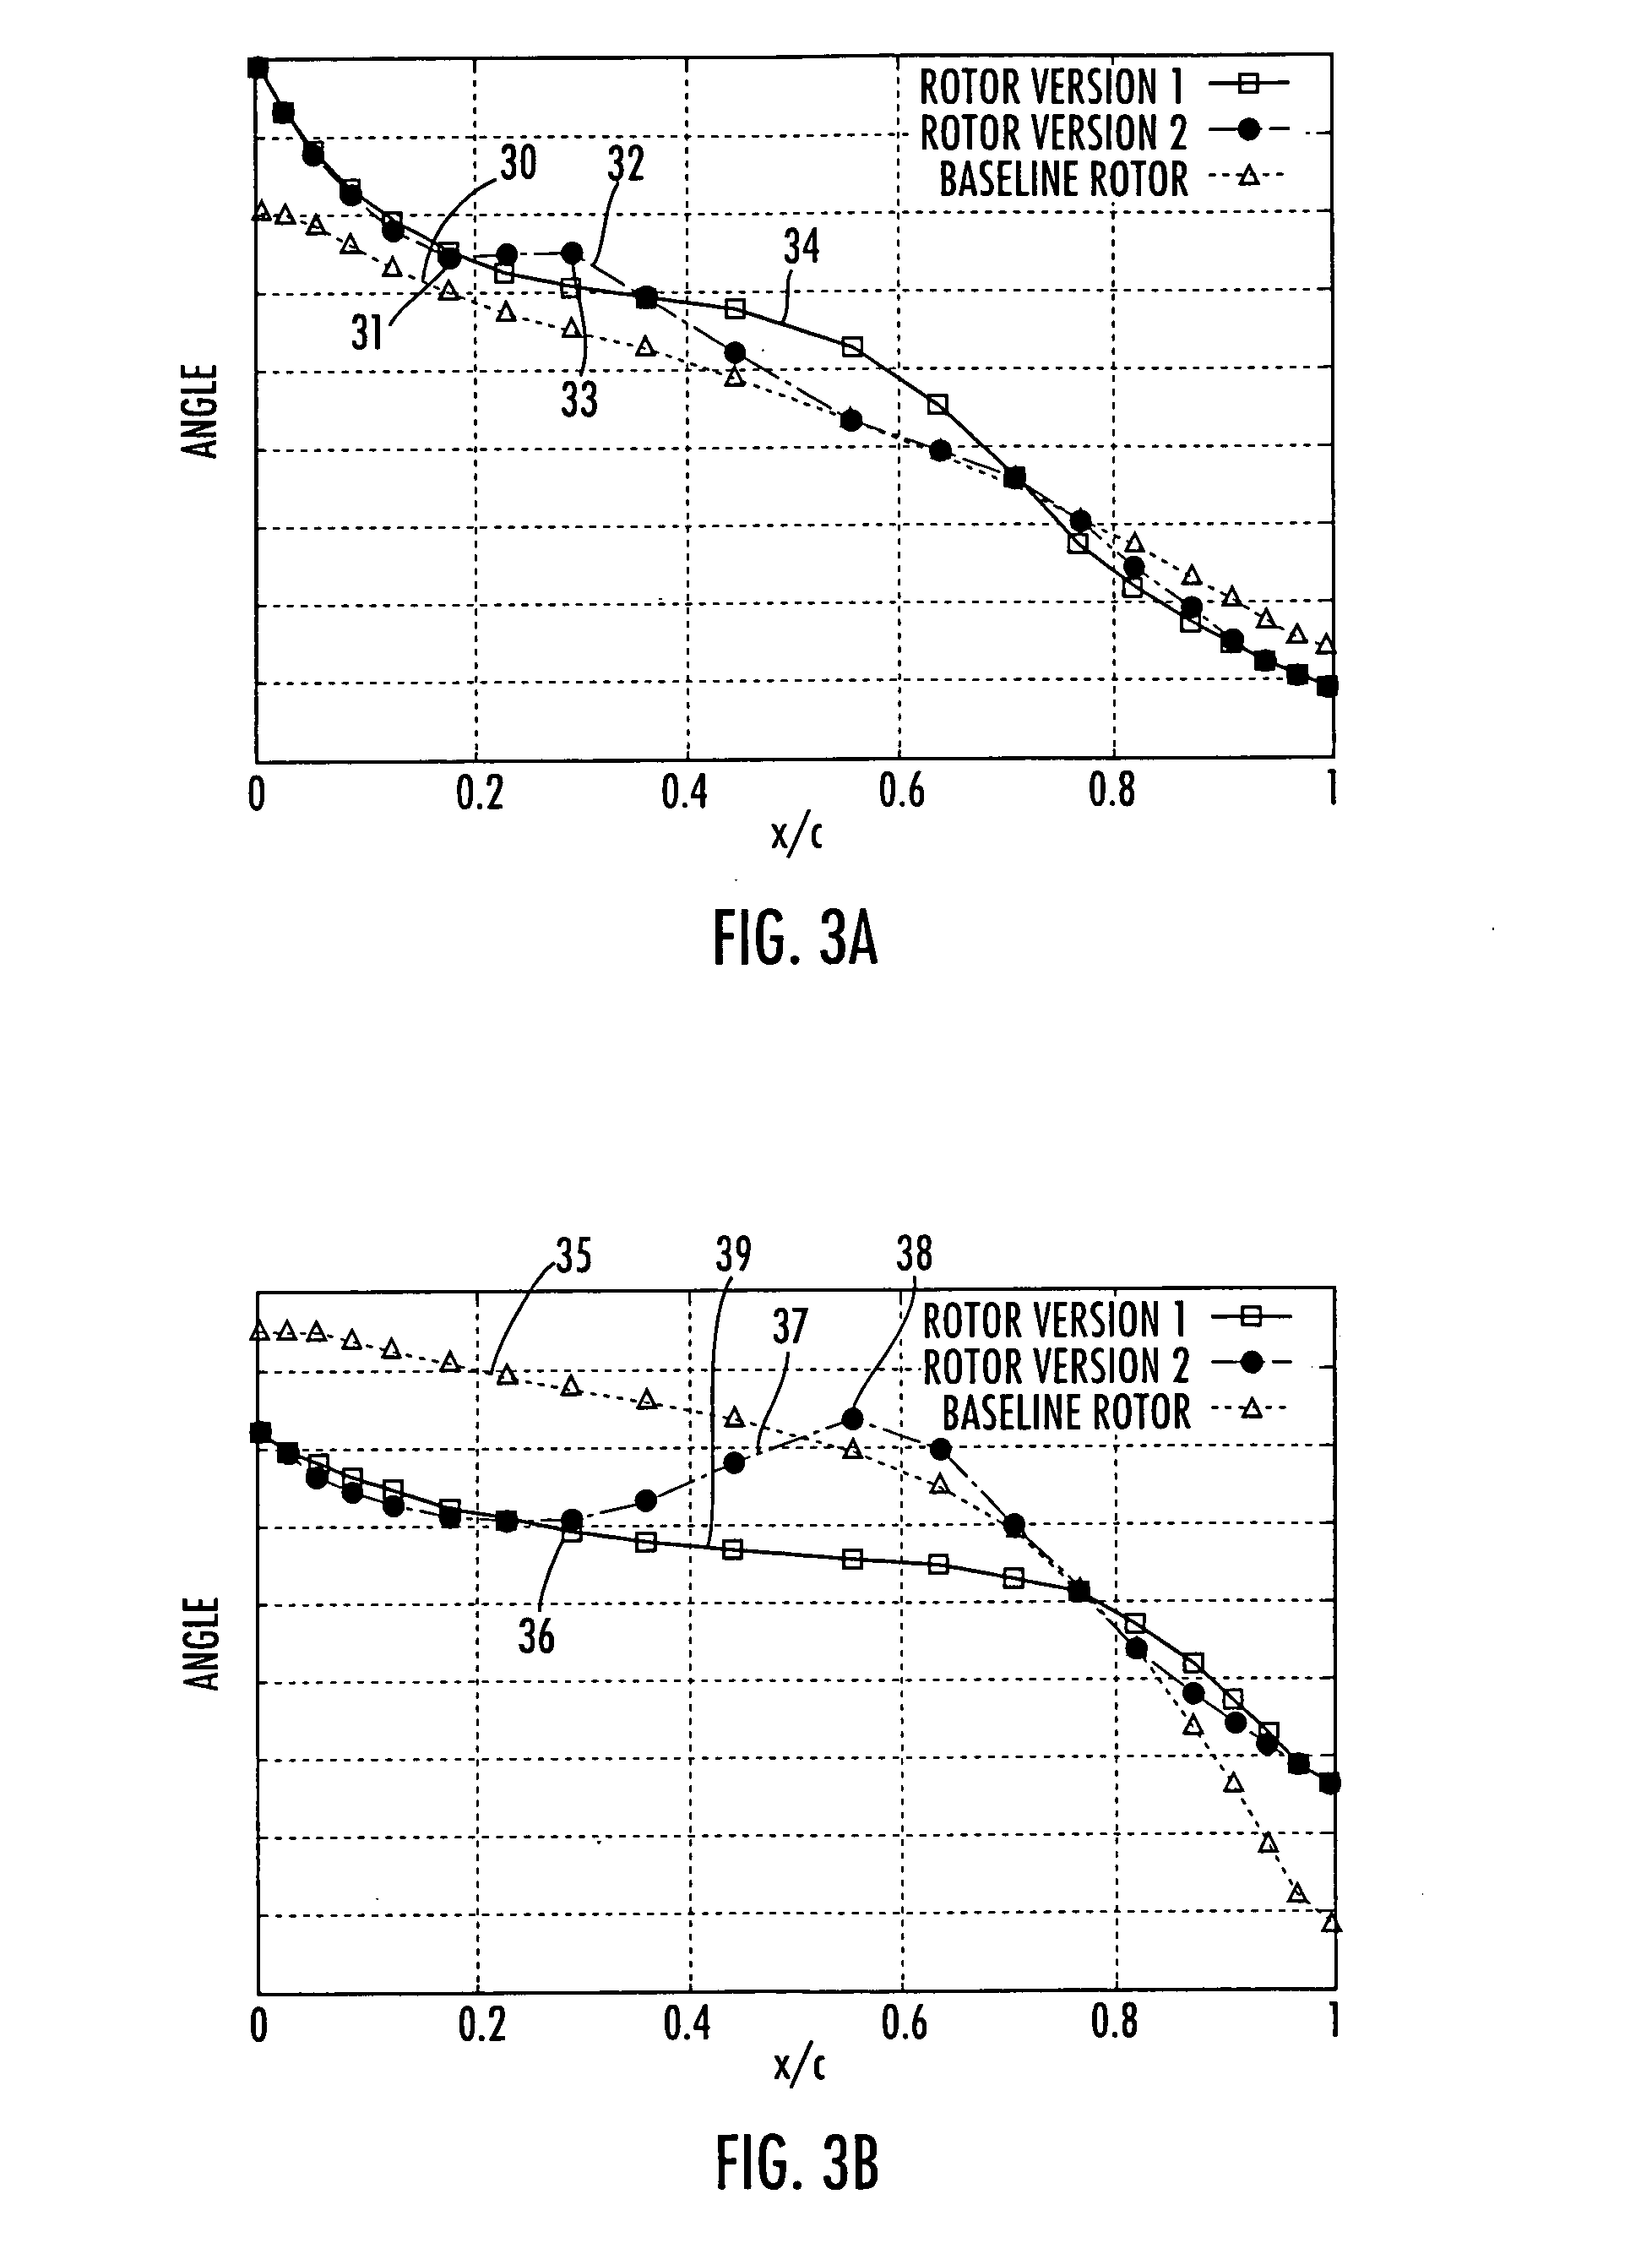 Transonic compressor rotors with non-monotonic meanline angle distributions